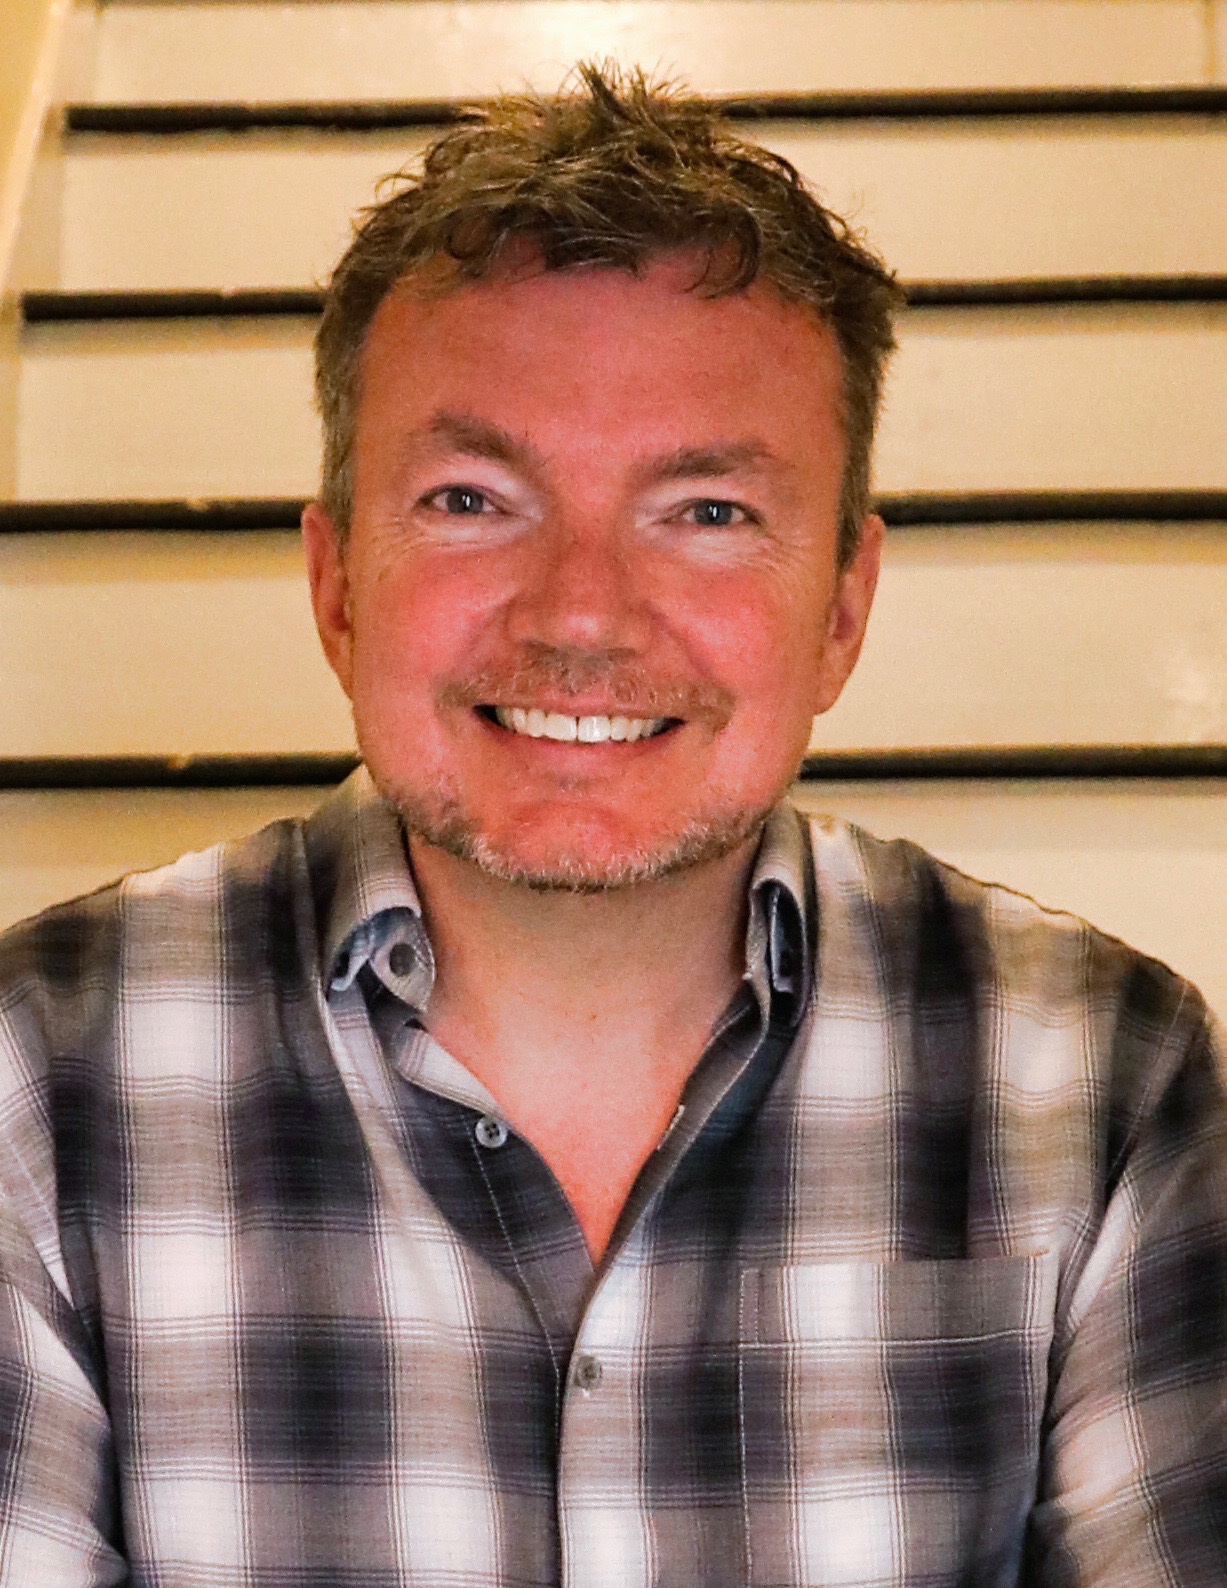 A headshot of a smiling man wearing a plaid shirt. 